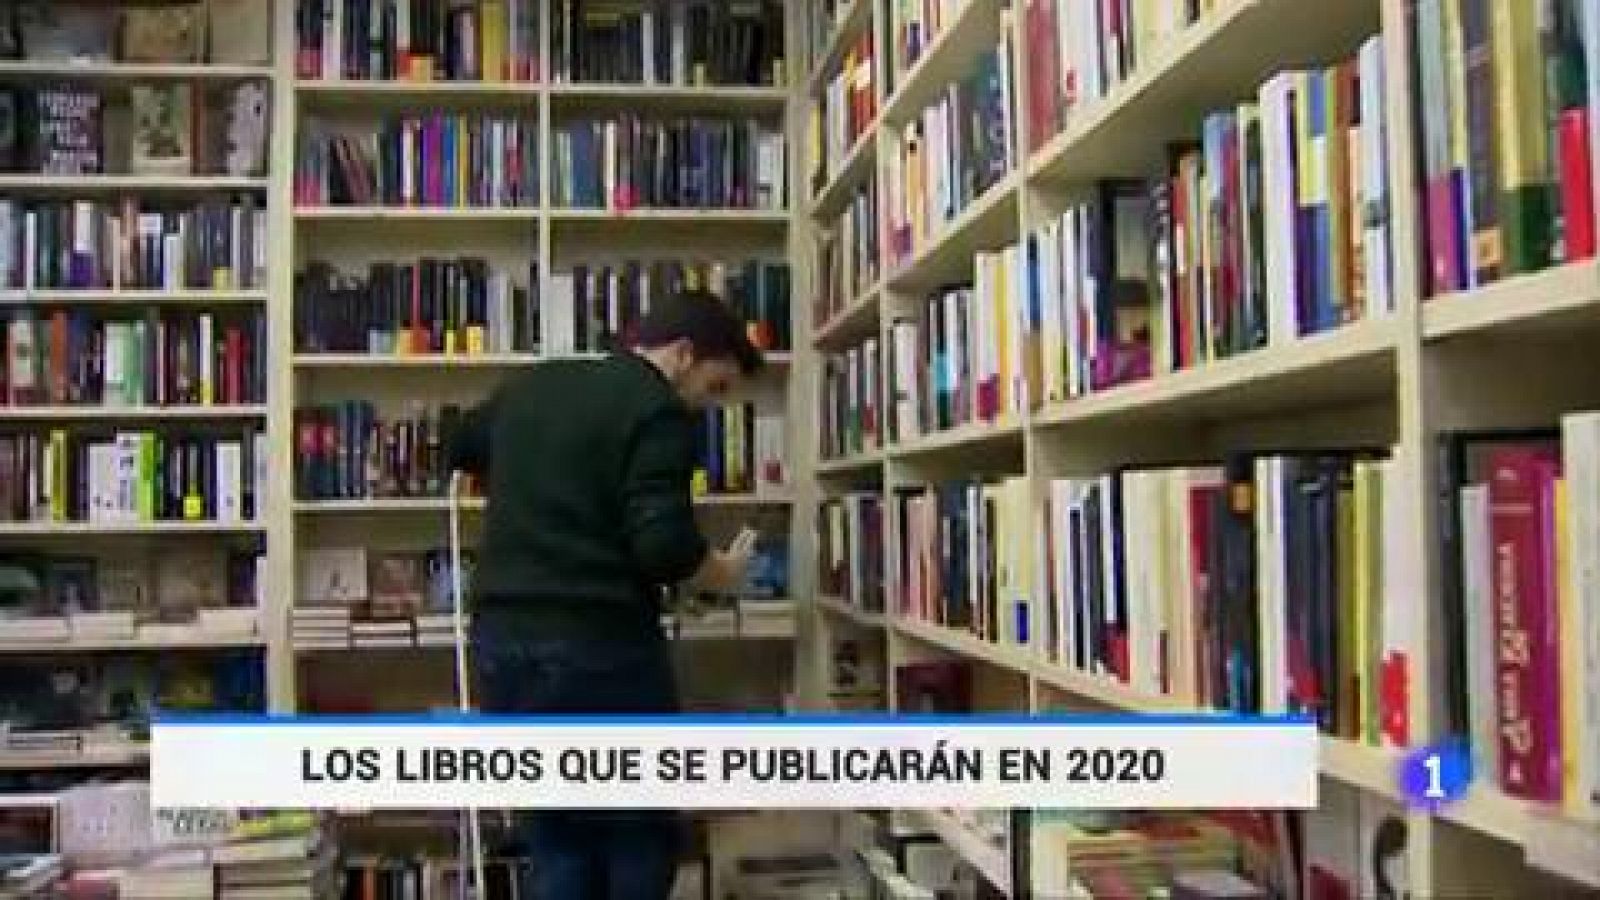 Roberto Saviano, Elvira Lindo o Ian McEwan destacan en las novedades literarias que llegarán en 2020